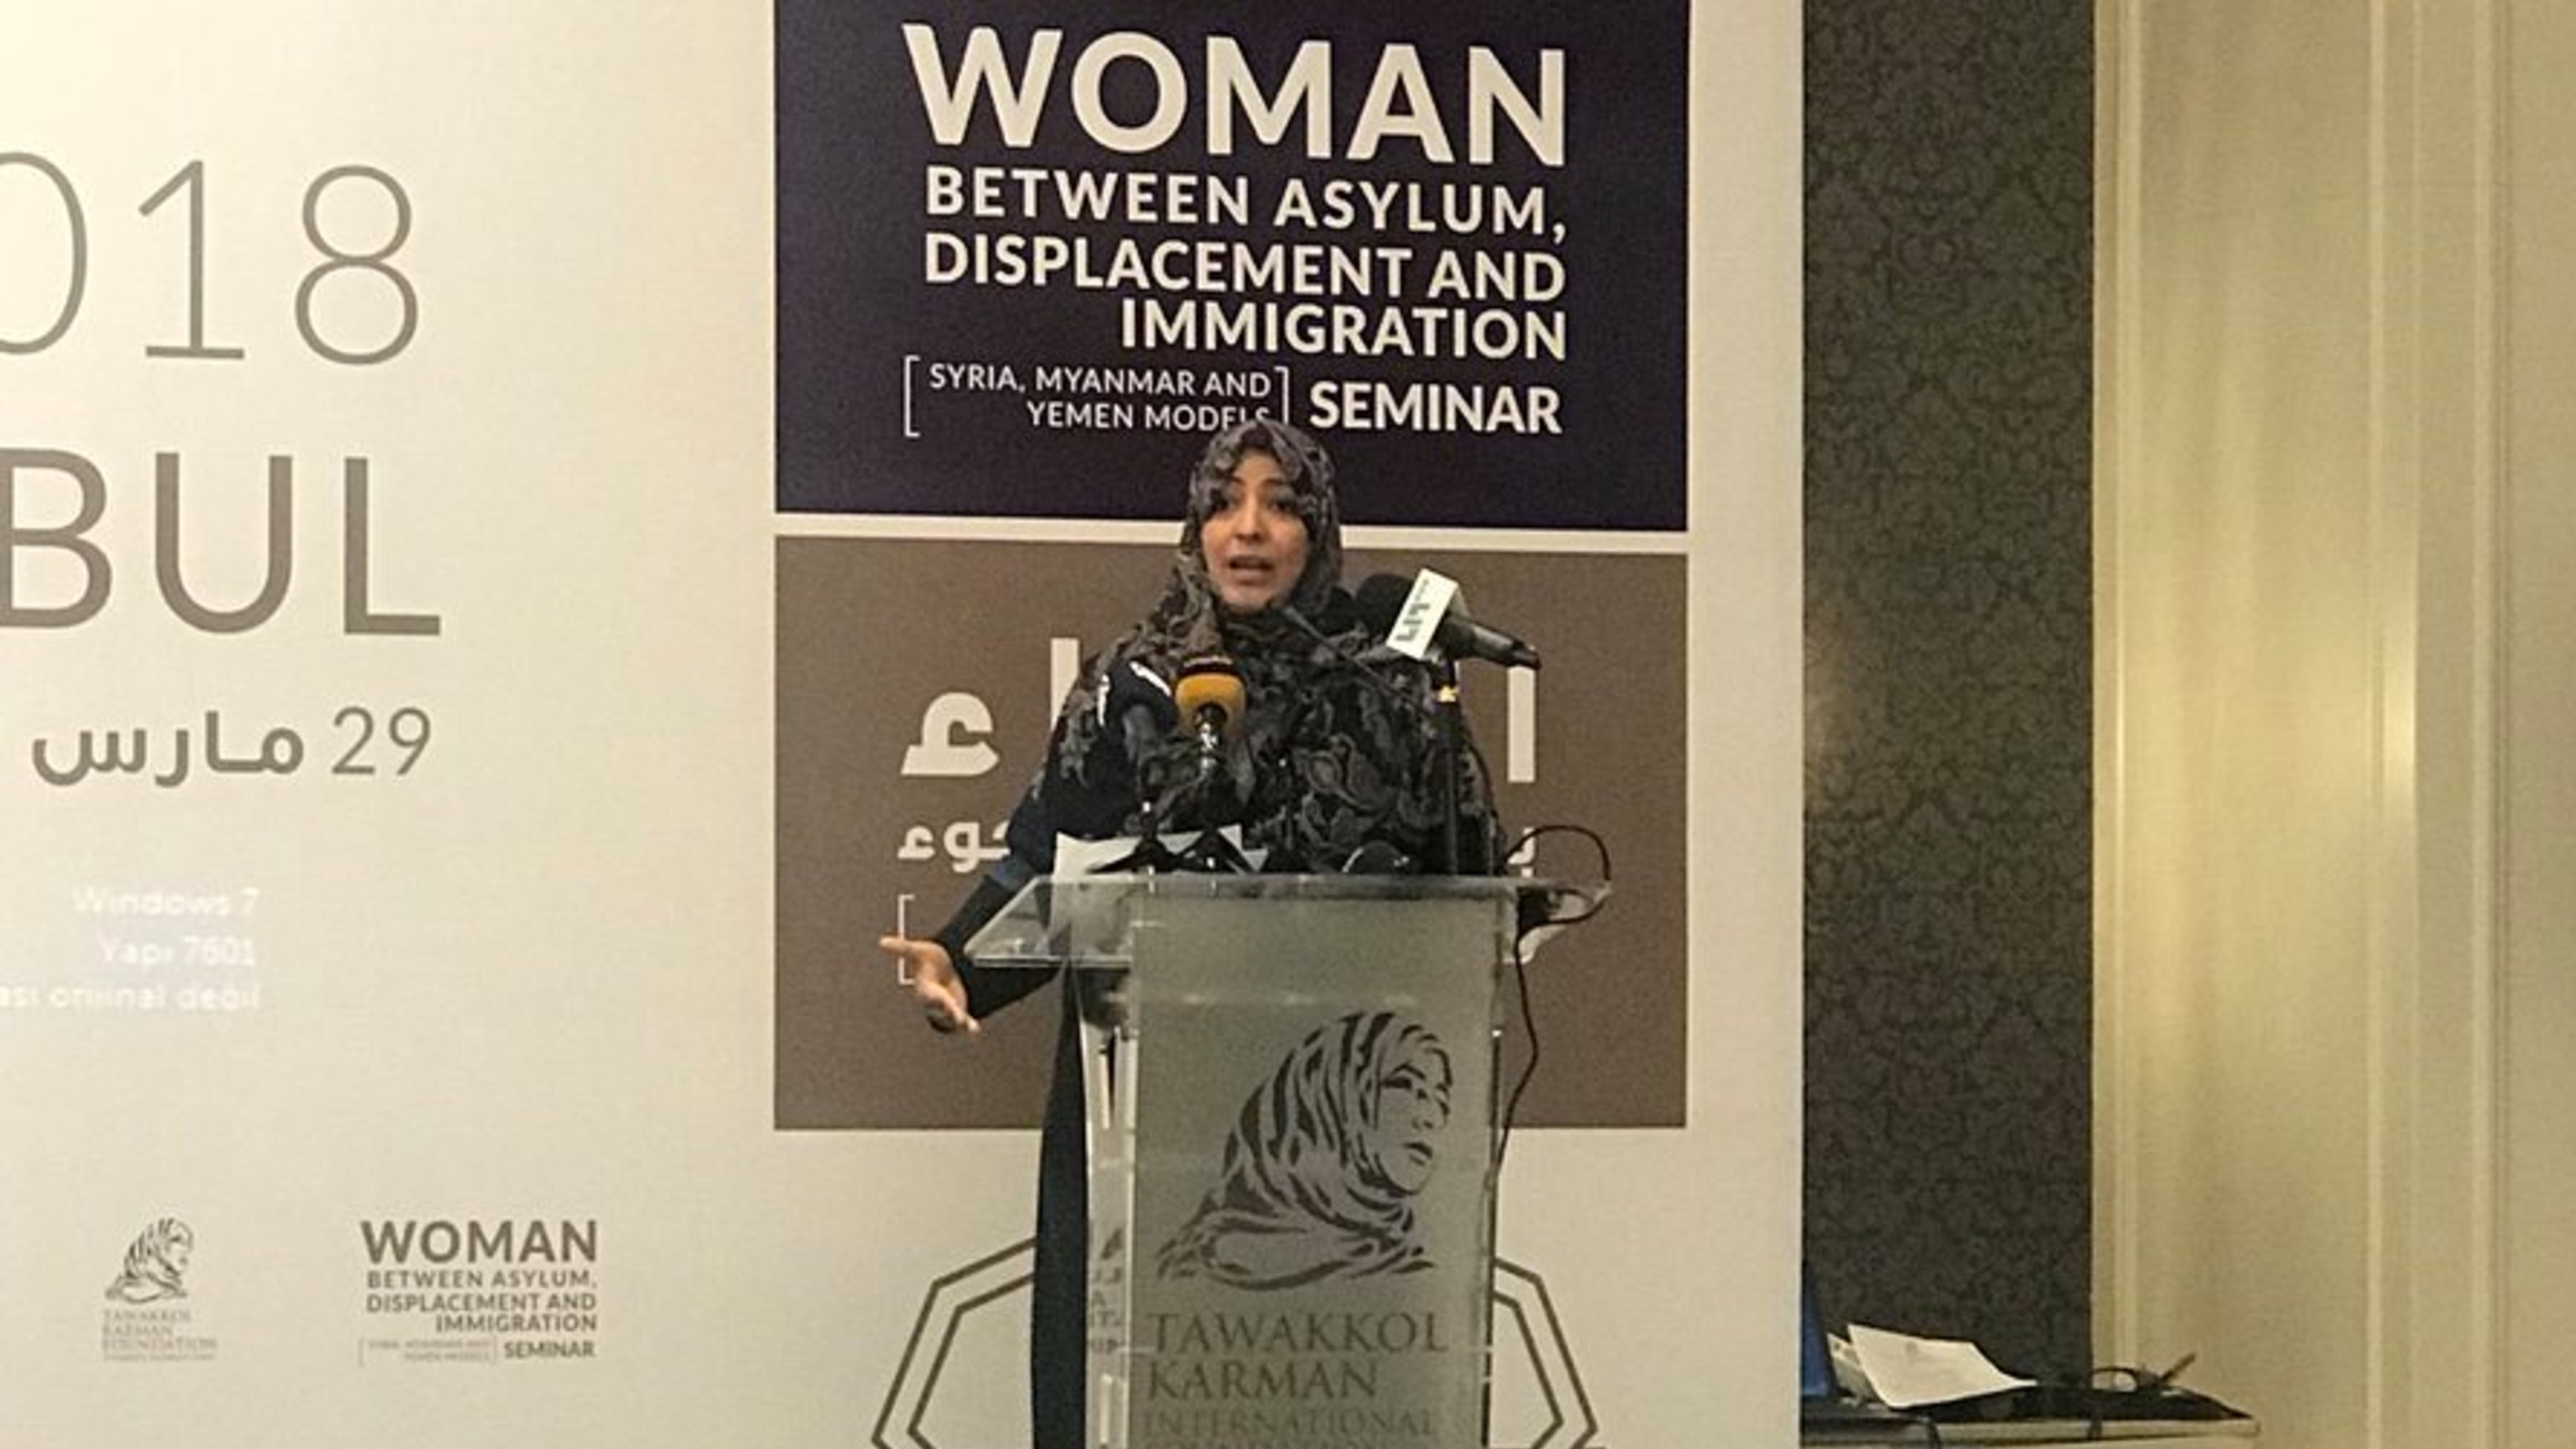 Mrs. Tawakkol Karman’s Speech in Istanbul on Asylum, Displacement and Immigration Women between Asylum, Displacement and Immigration  